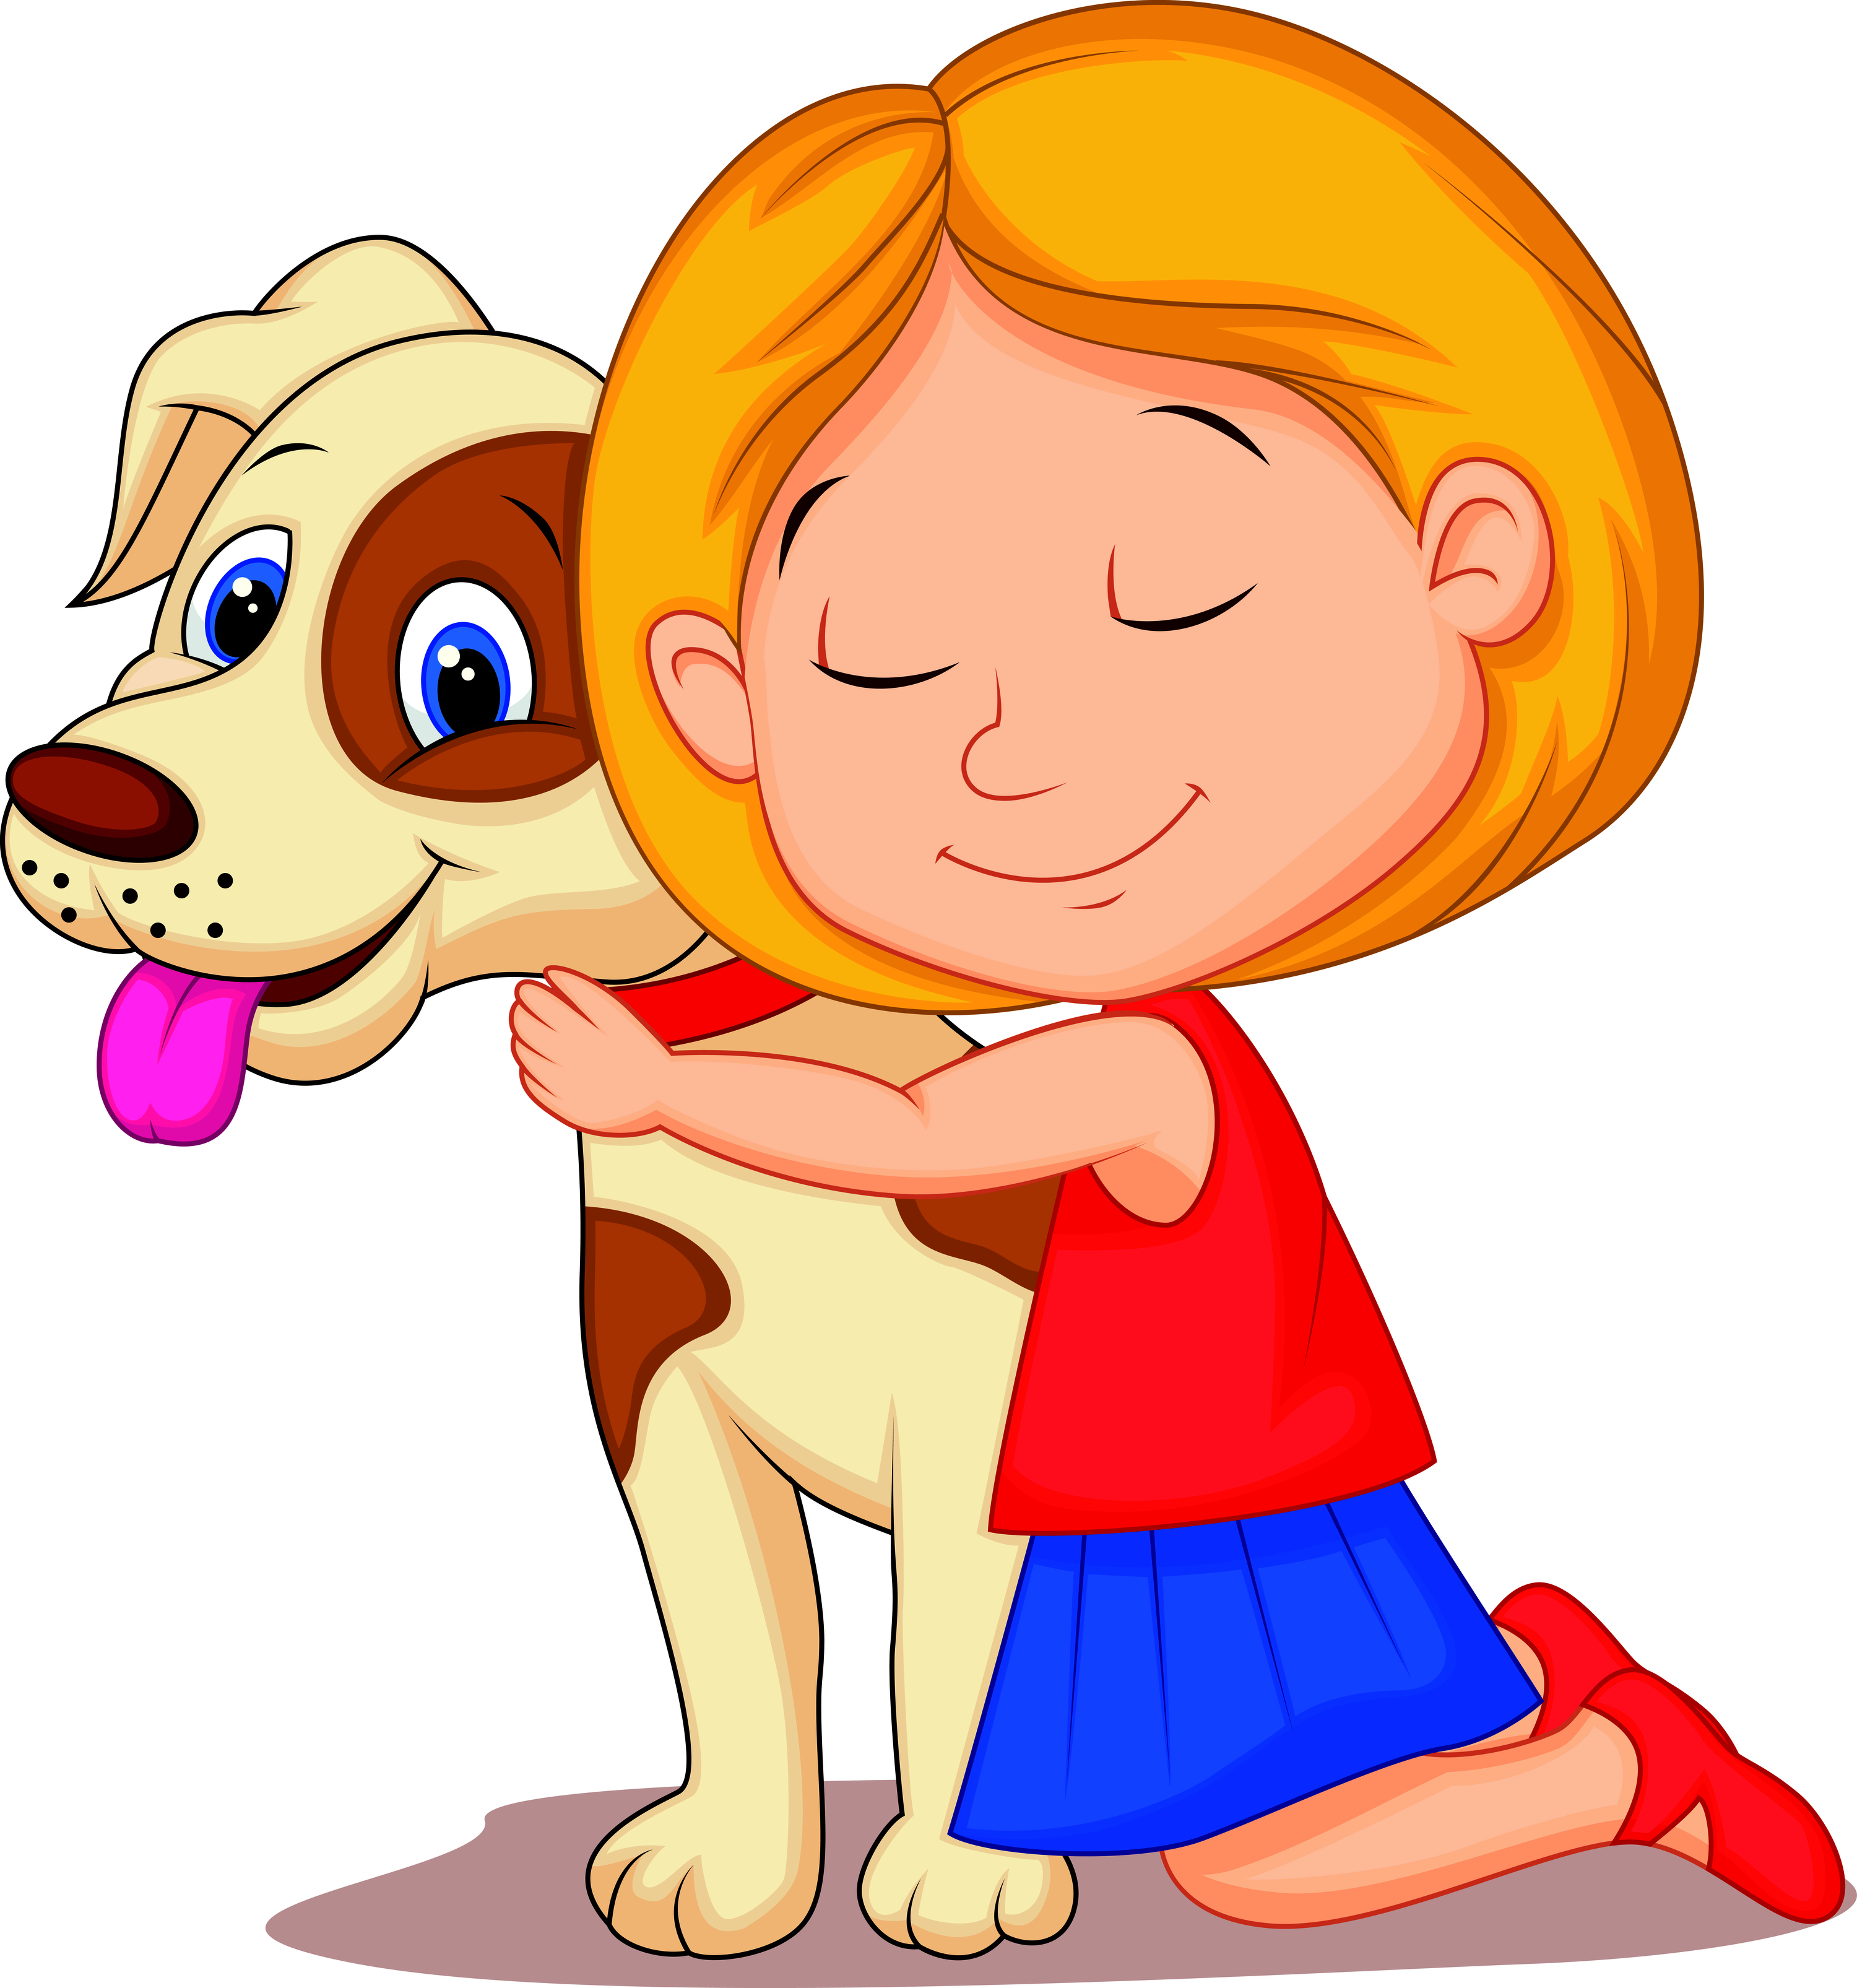 Pet Animated Images - Dog Puppy Cartoon Cuteness | Bodenswasuee